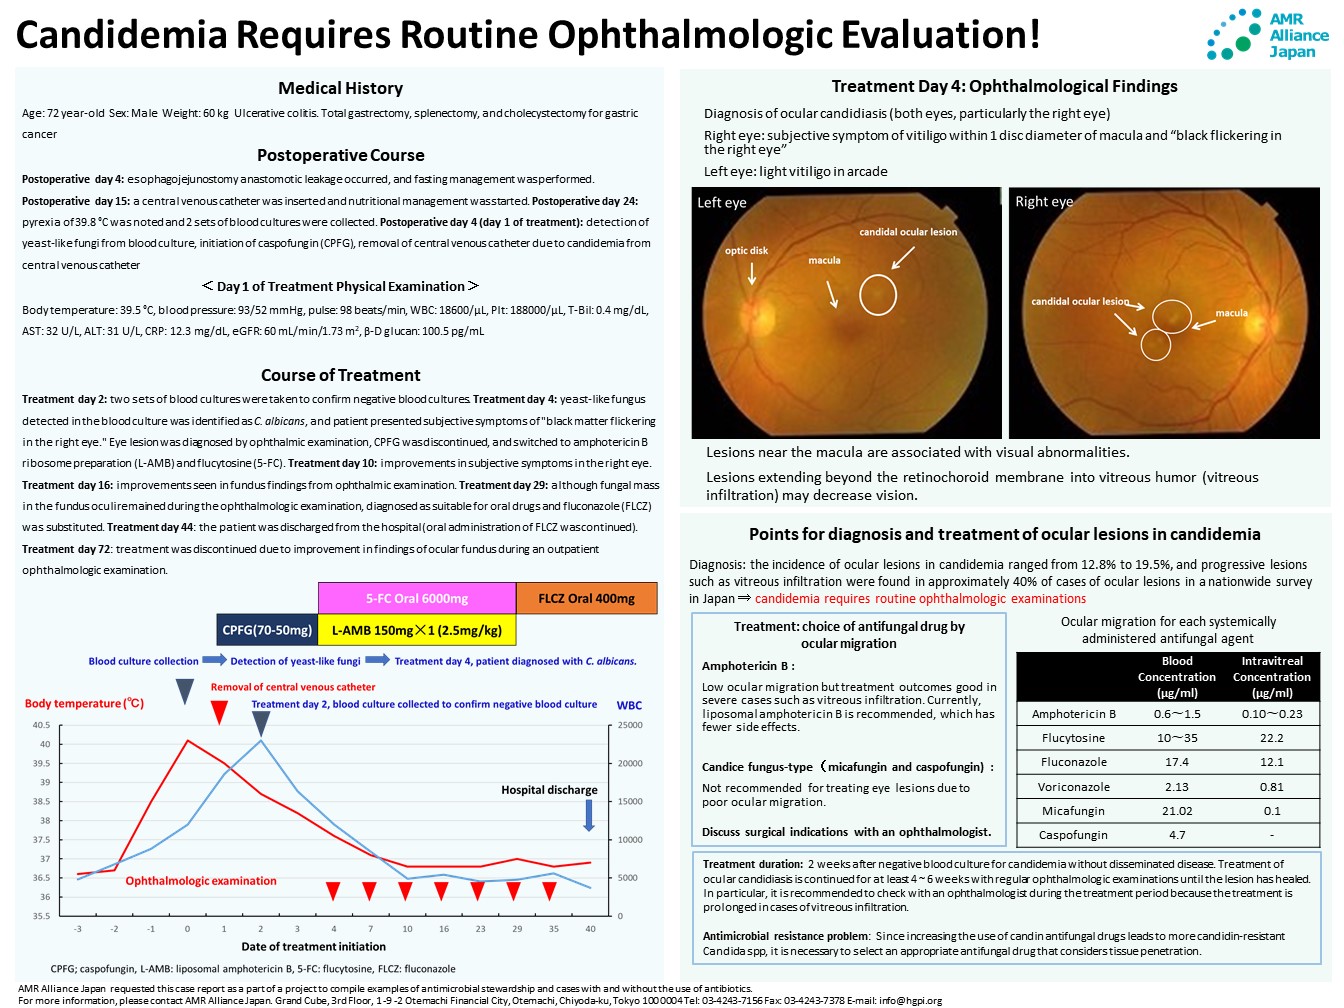 [Case Study] Takashi Ueda “Candidemia Requires Routine Ophthalmologic Evaluation!” (AMR Alliance Japan, November 18, 2021)